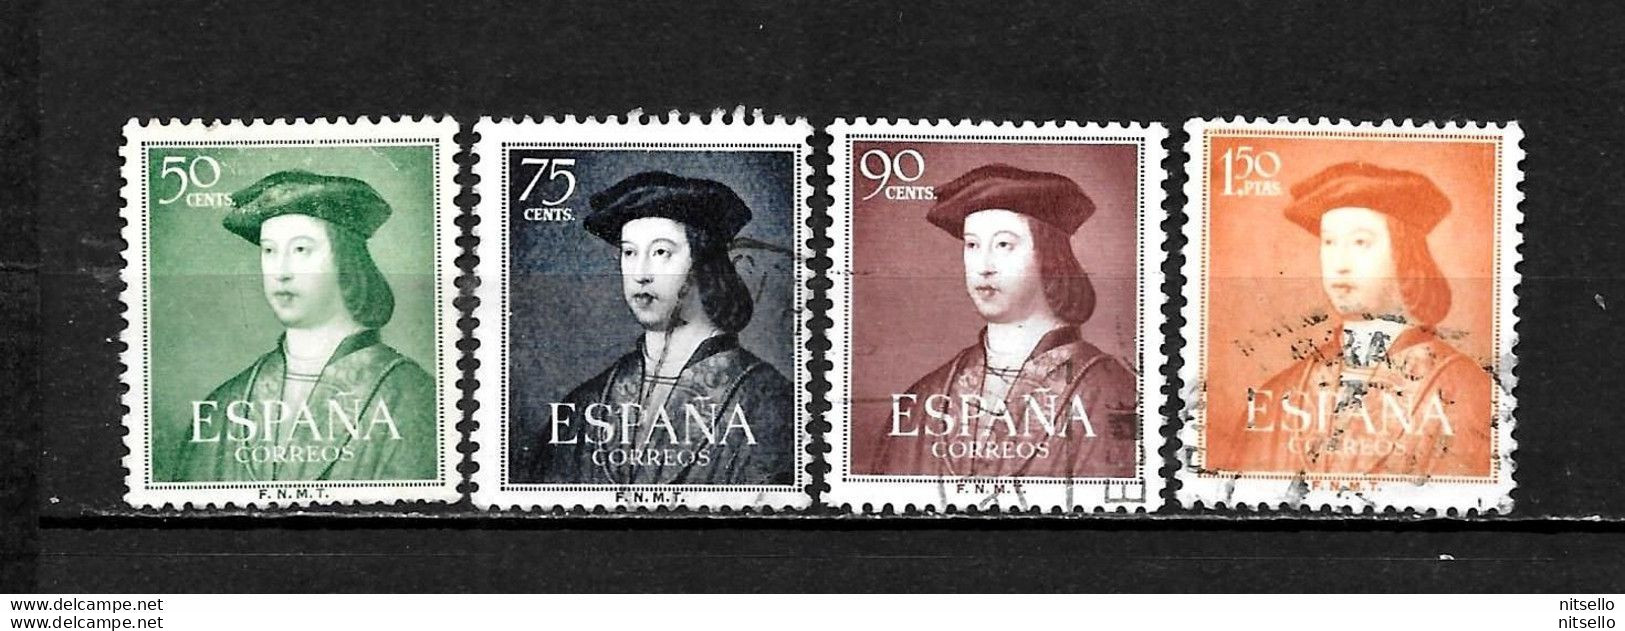 LOTE 1999 /// (C015) ESPAÑA 1952  EDIFIL Nº: 1106/1109  ¡¡¡ OFERTA - LIQUIDATION - JE LIQUIDE !!! - Used Stamps